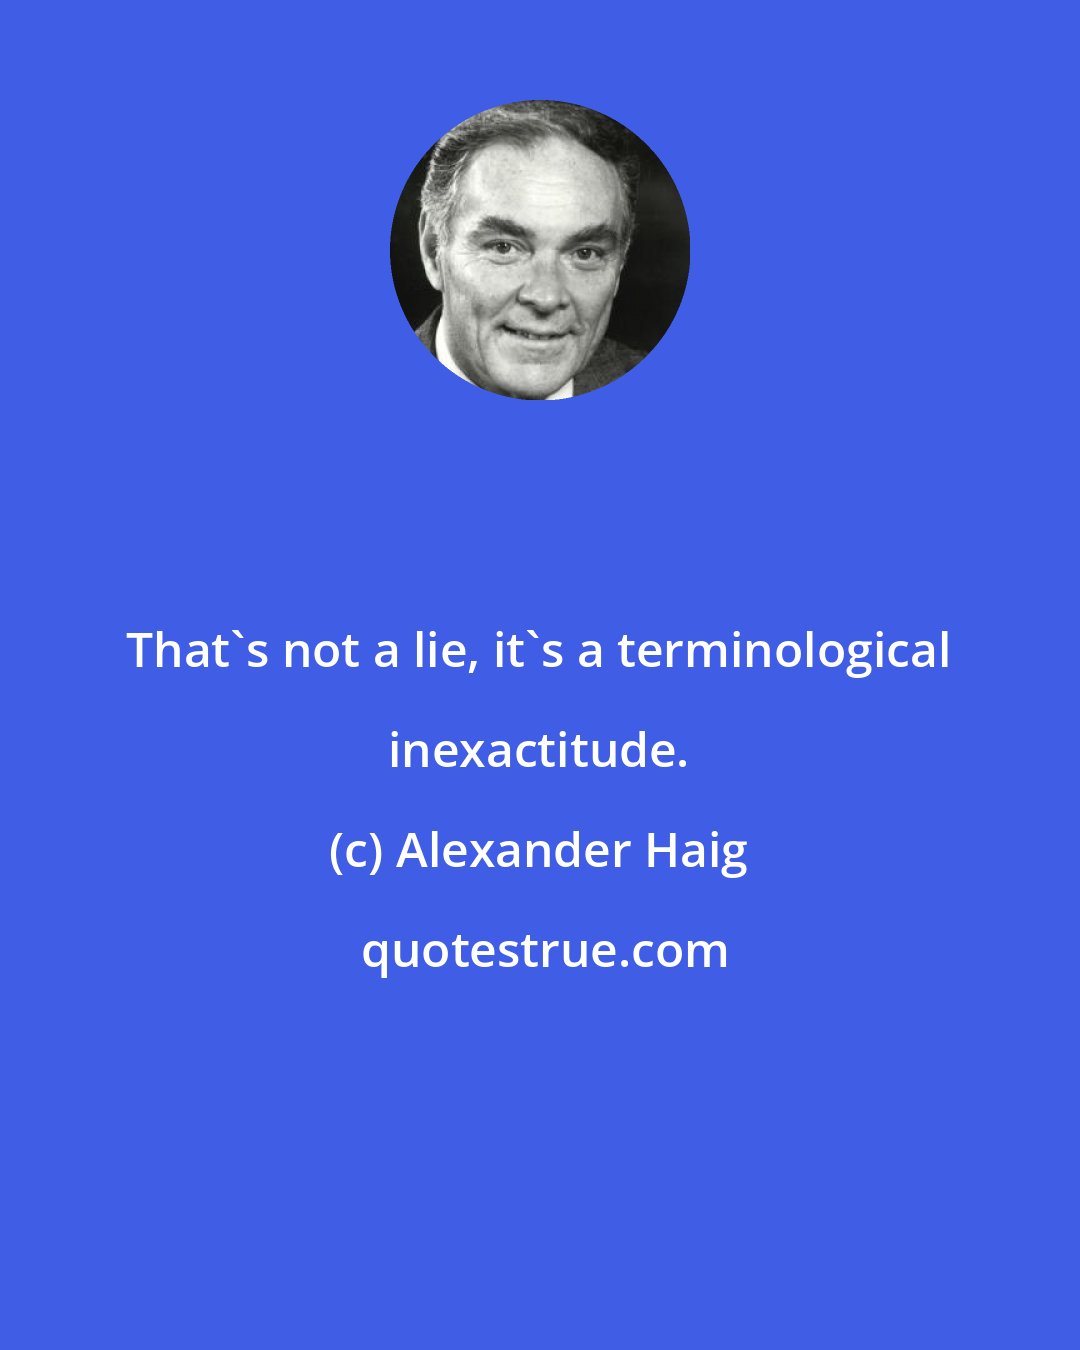 Alexander Haig: That's not a lie, it's a terminological inexactitude.